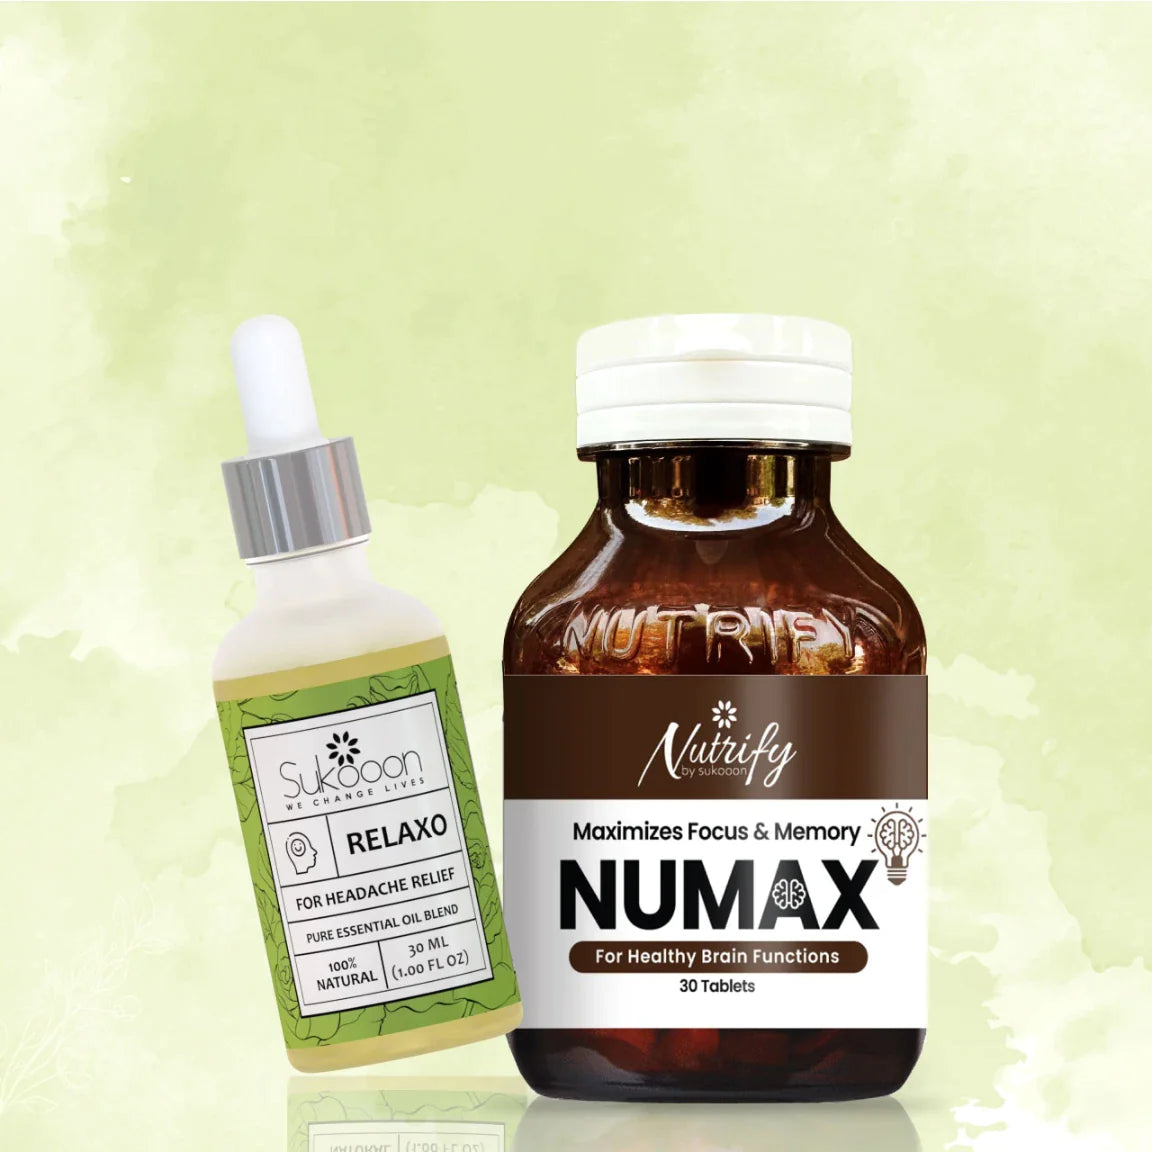 Relaxo (30ML) Essential Oil + Numax Tablets